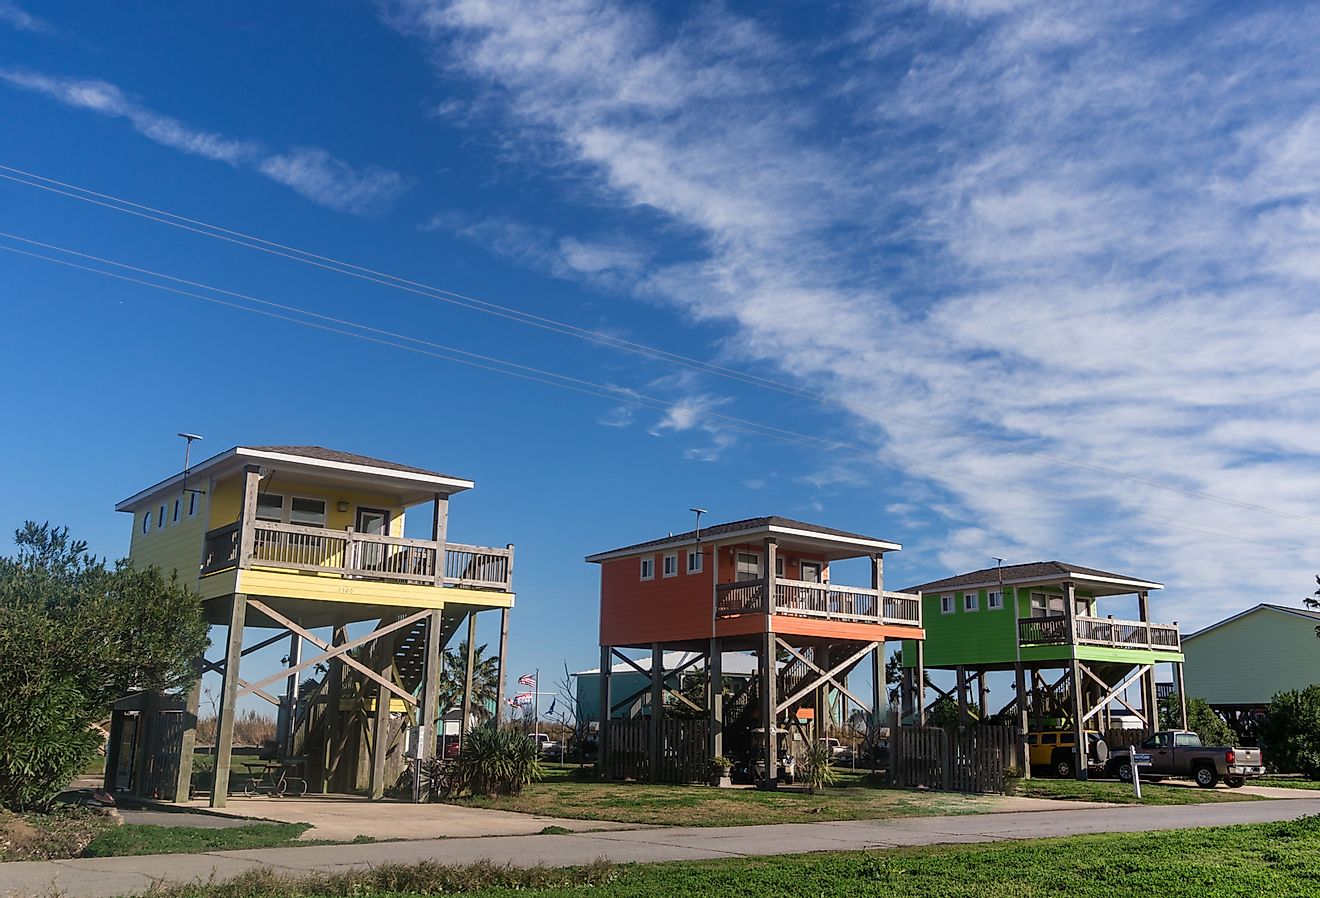 Row of colorful houses built on high stilts on the coast of Louisiana, Holly Beach. Image credit Heidi Besen via Shutterstock